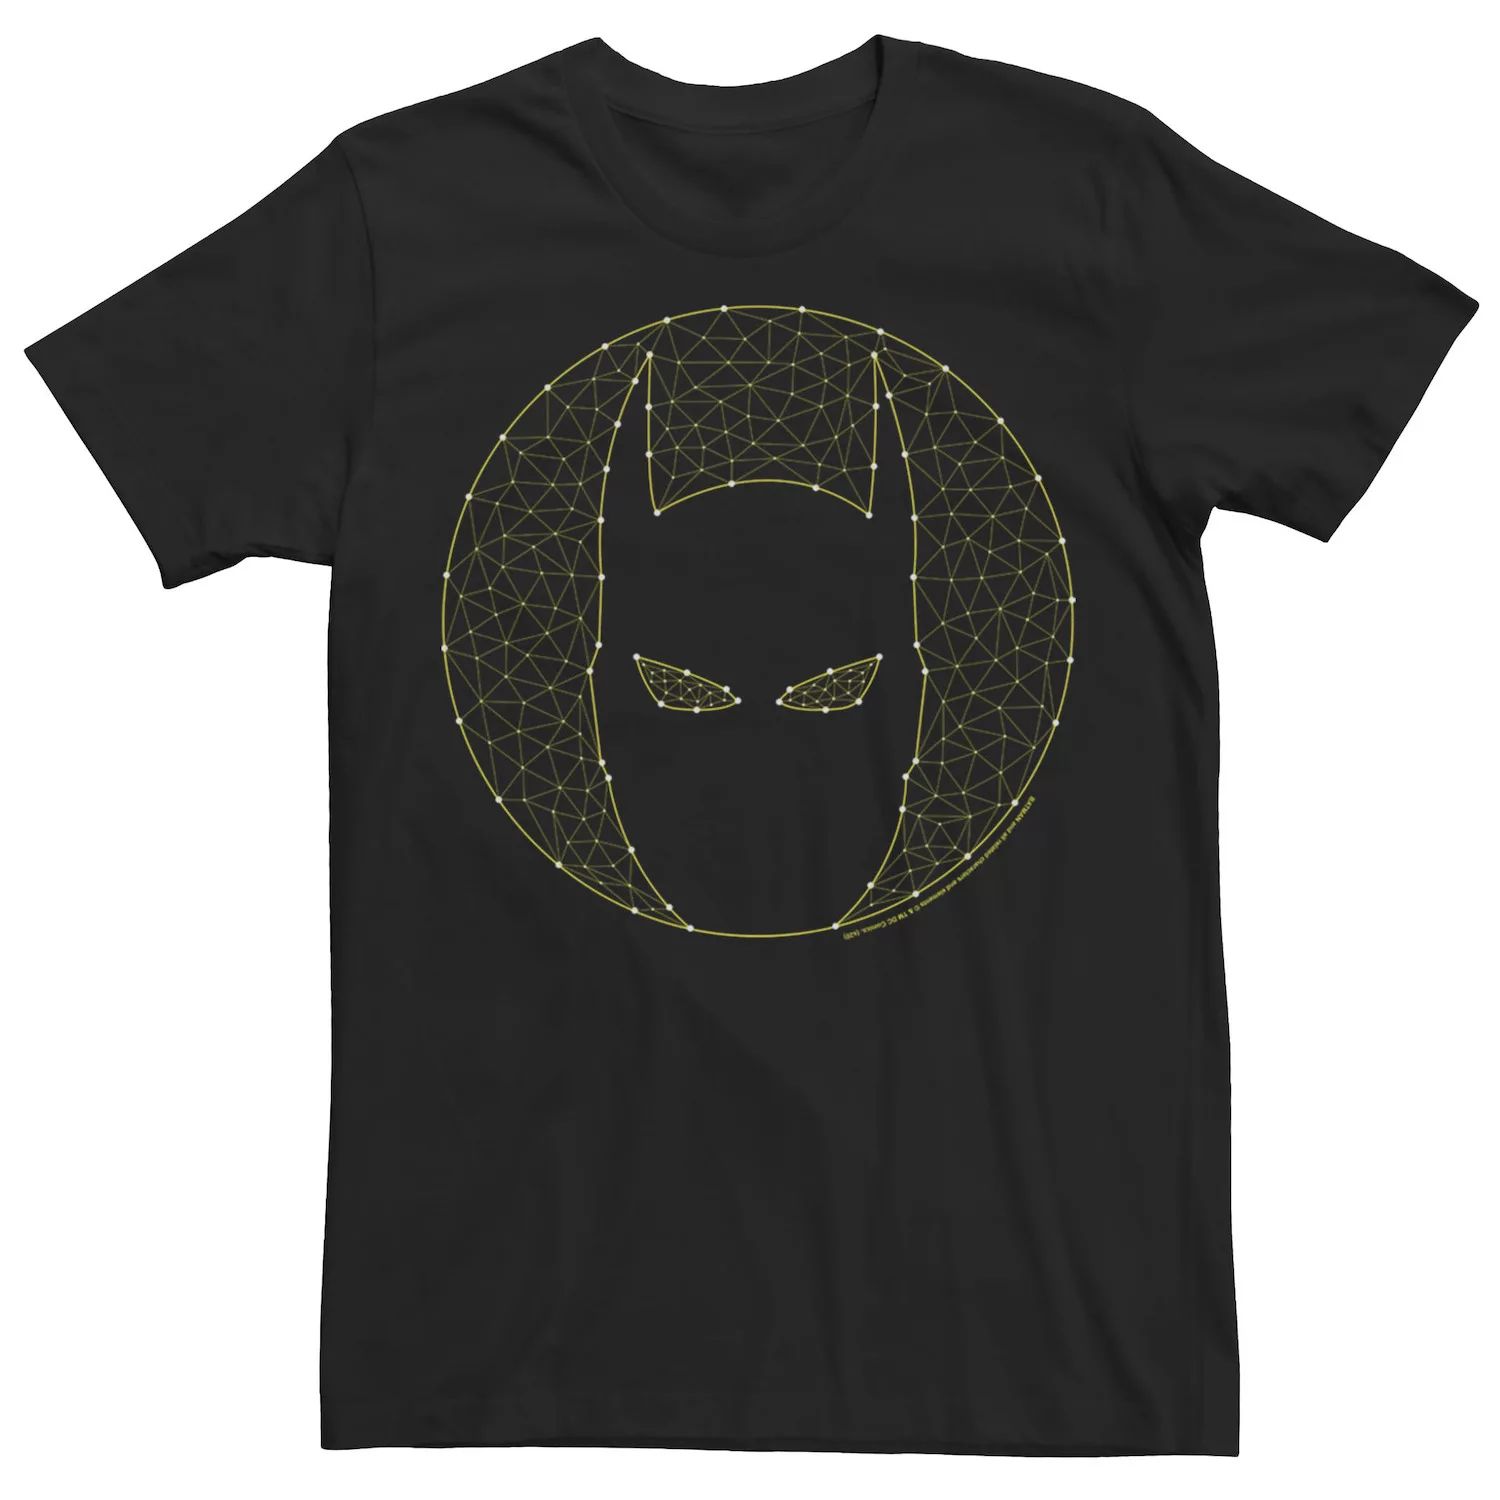 Мужская футболка DC Fandome Batman с геометрическим контуром Луны и силуэтом Licensed Character